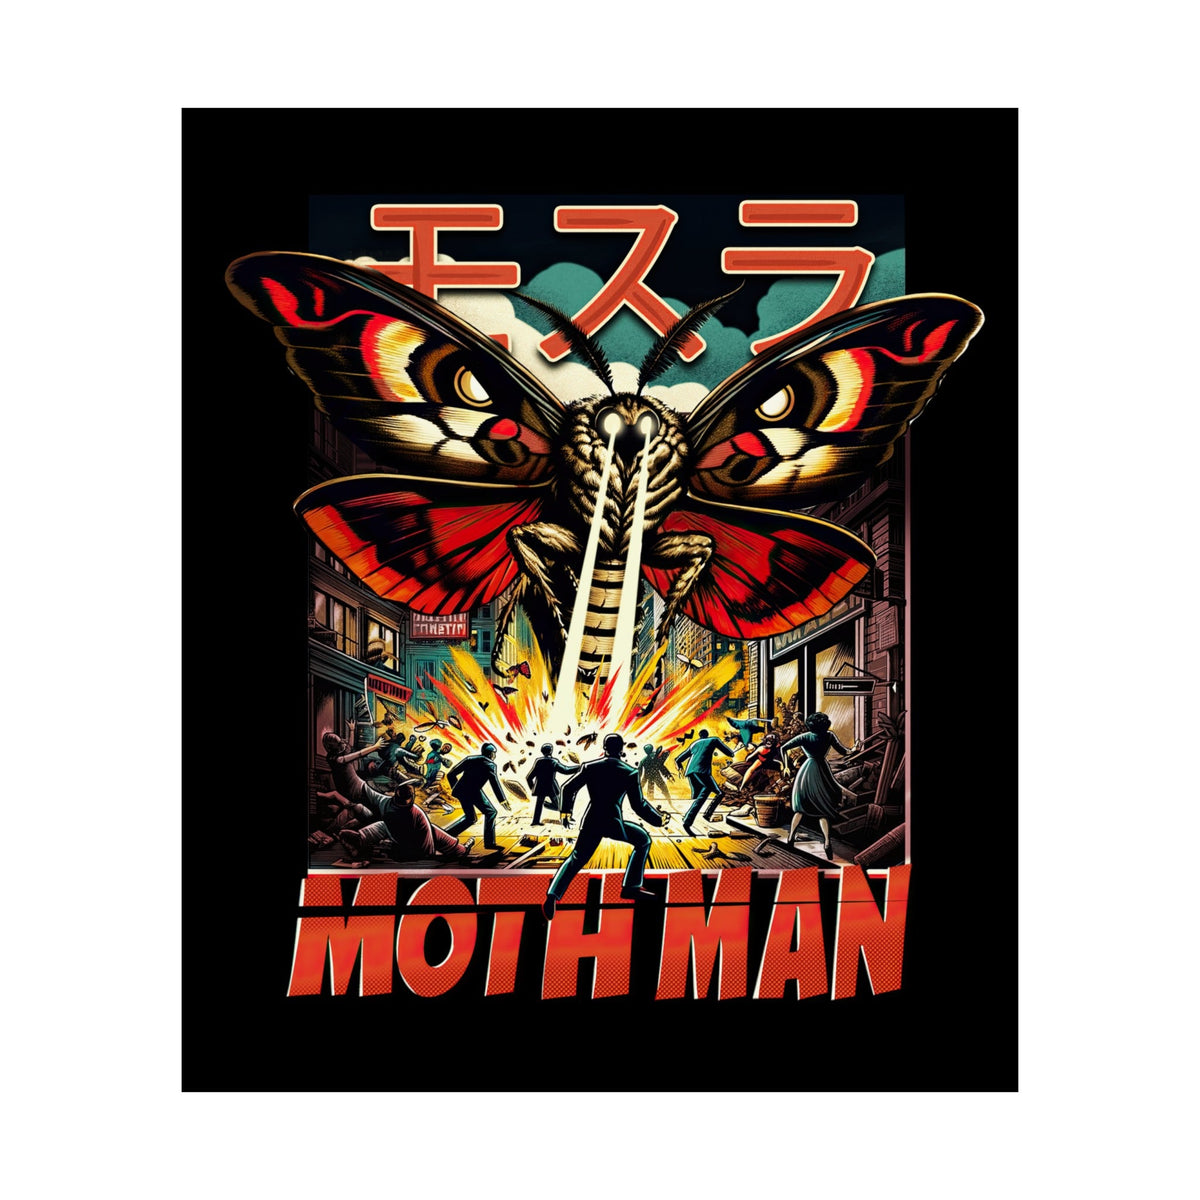 Mothman Attack Comic Style Art Print - Goth Cloth Co.Poster13075002065344575882